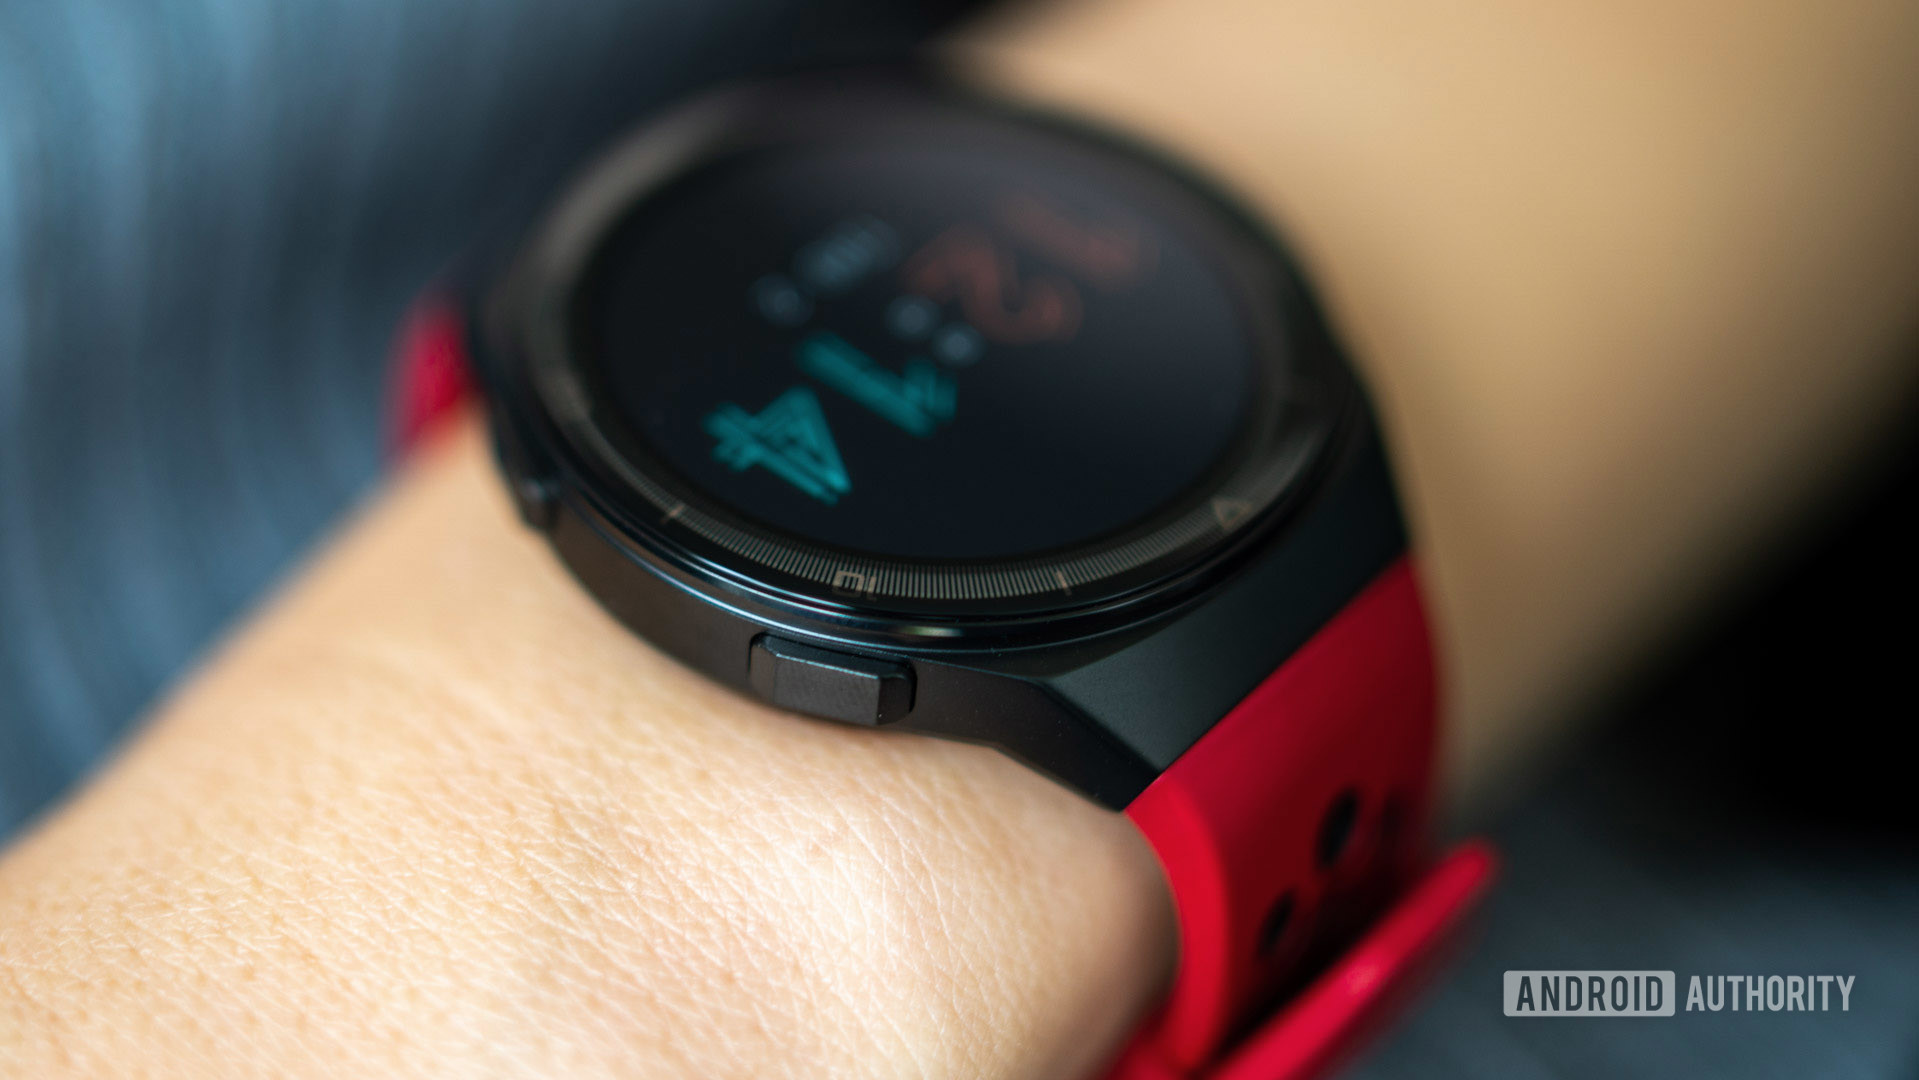 Huawei Watch GT 2e hands-on: The endurance smartwatch